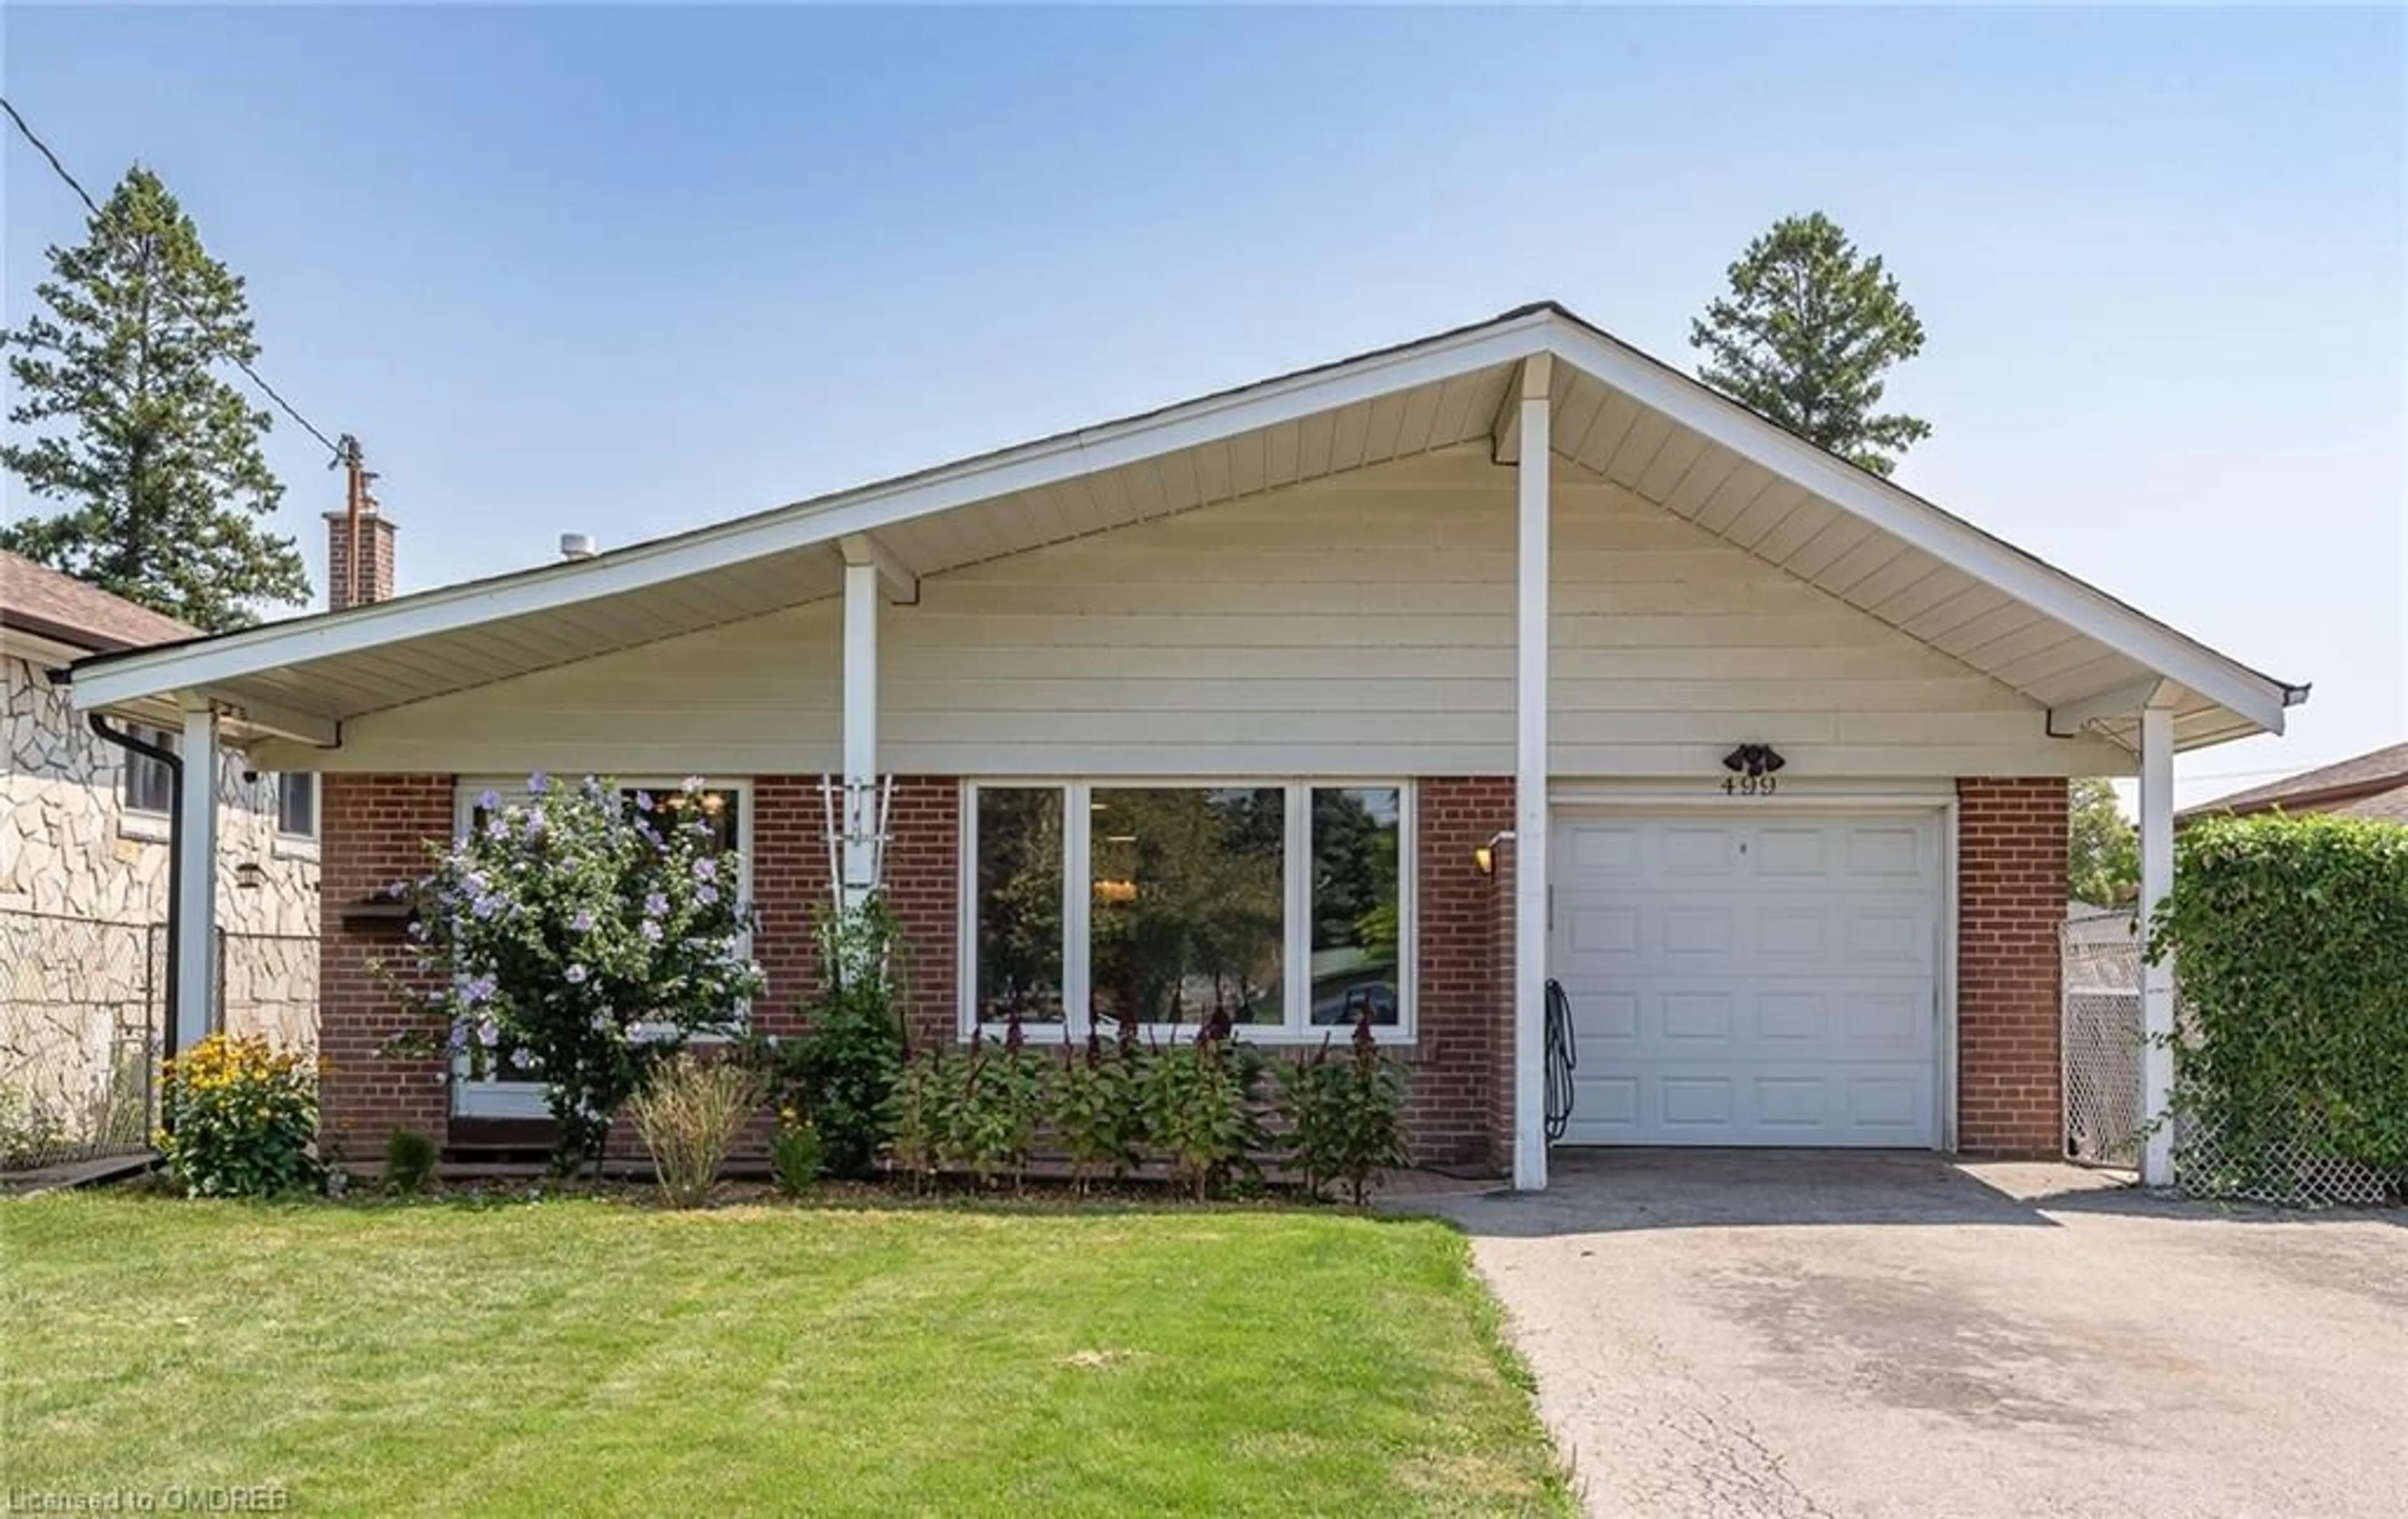 Home with brick exterior material for 499 Scarborough Golf Club Rd, Toronto Ontario M1G 1H3